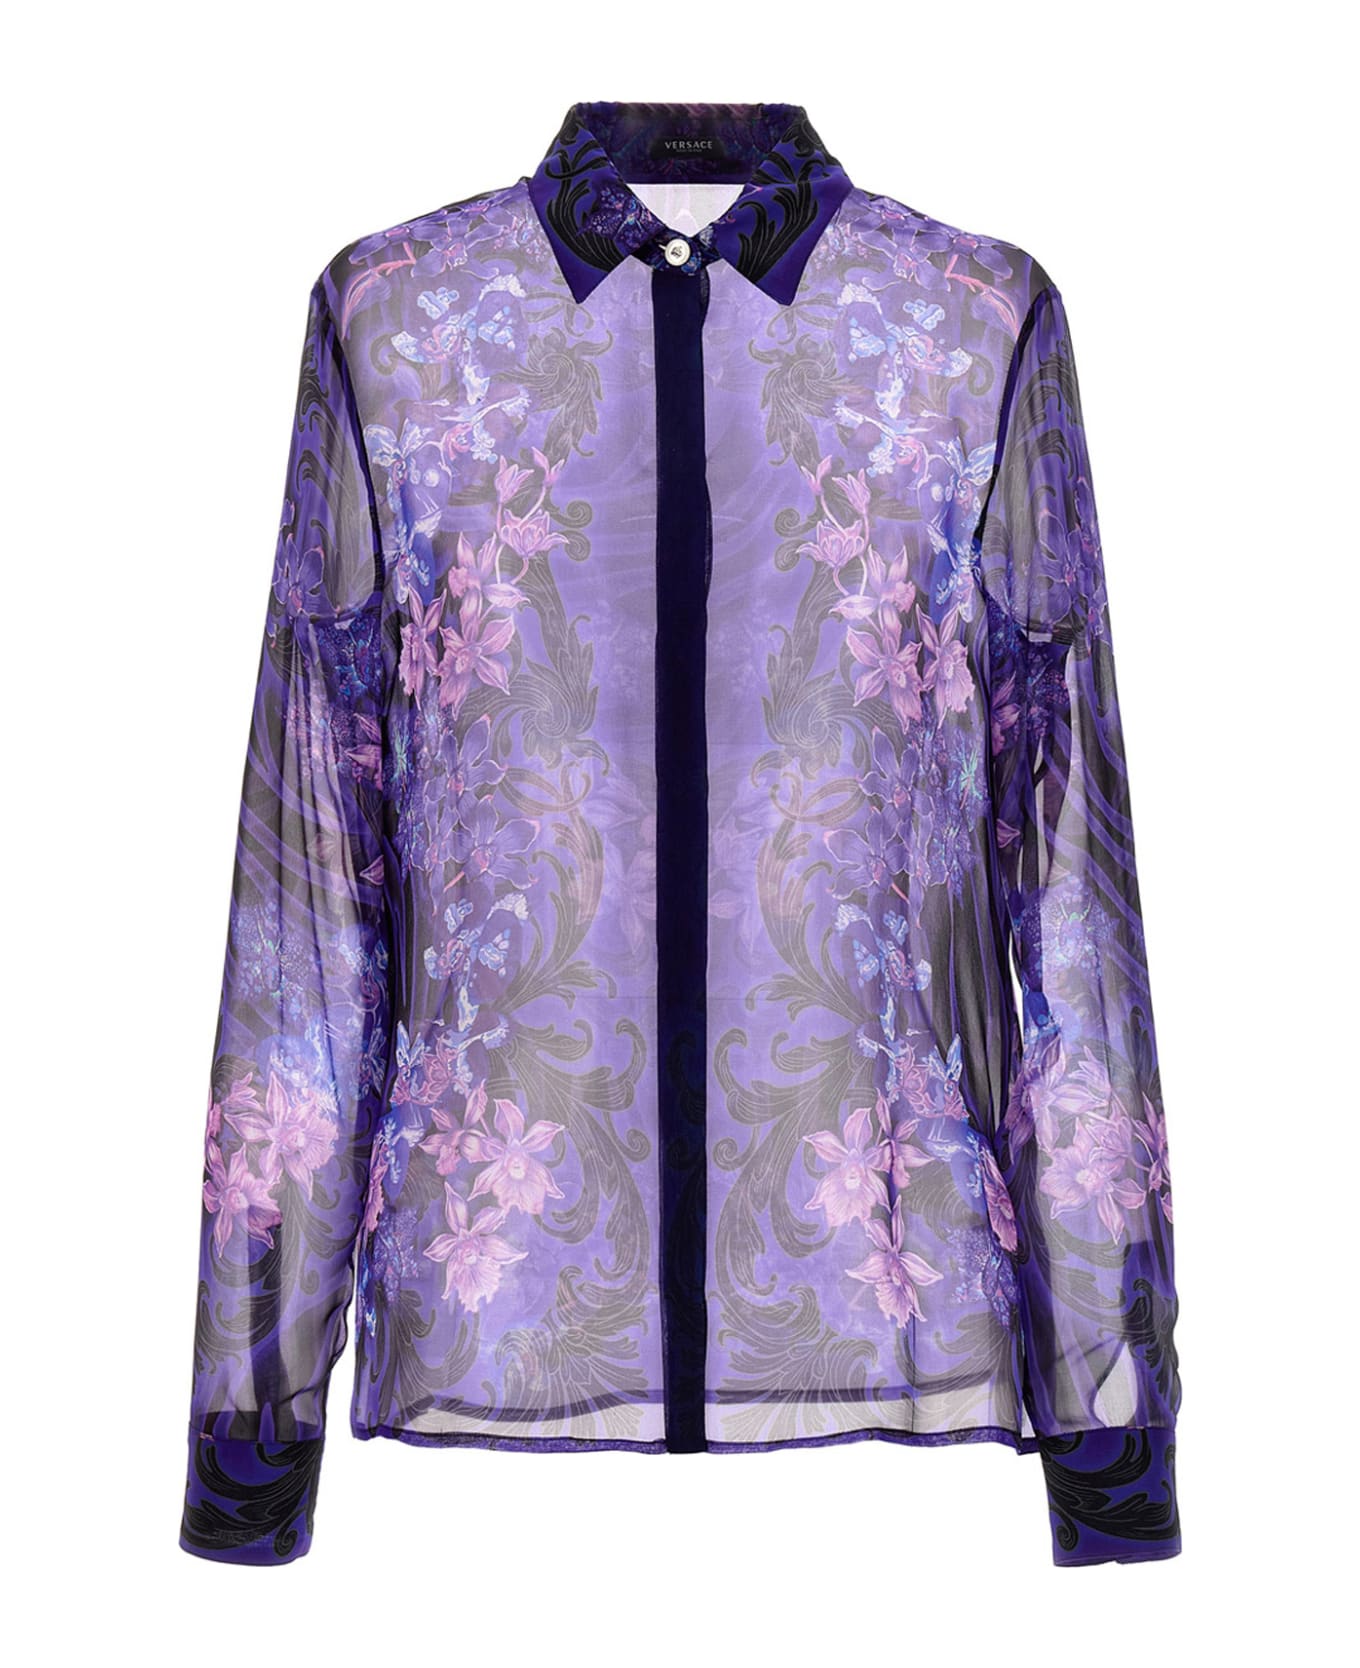 Versace 'barocco', 'barocco'shirt - Purple